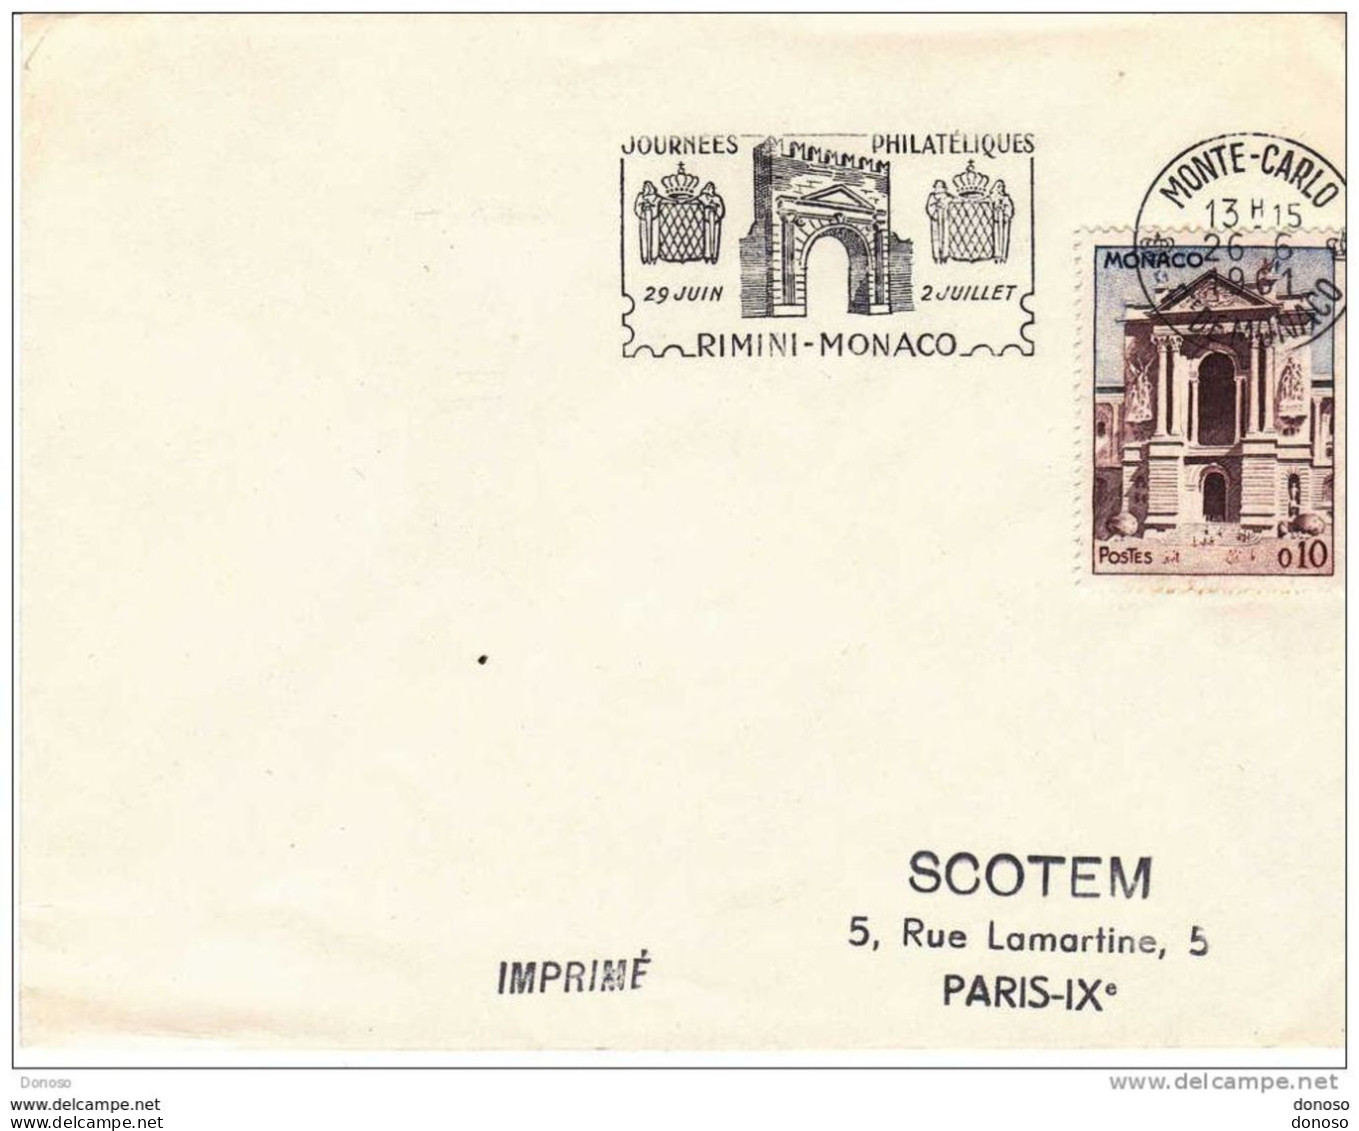 MONACO 1961 JOURNEES PHILATELIQUES RIMINI-MONACO - Postmarks